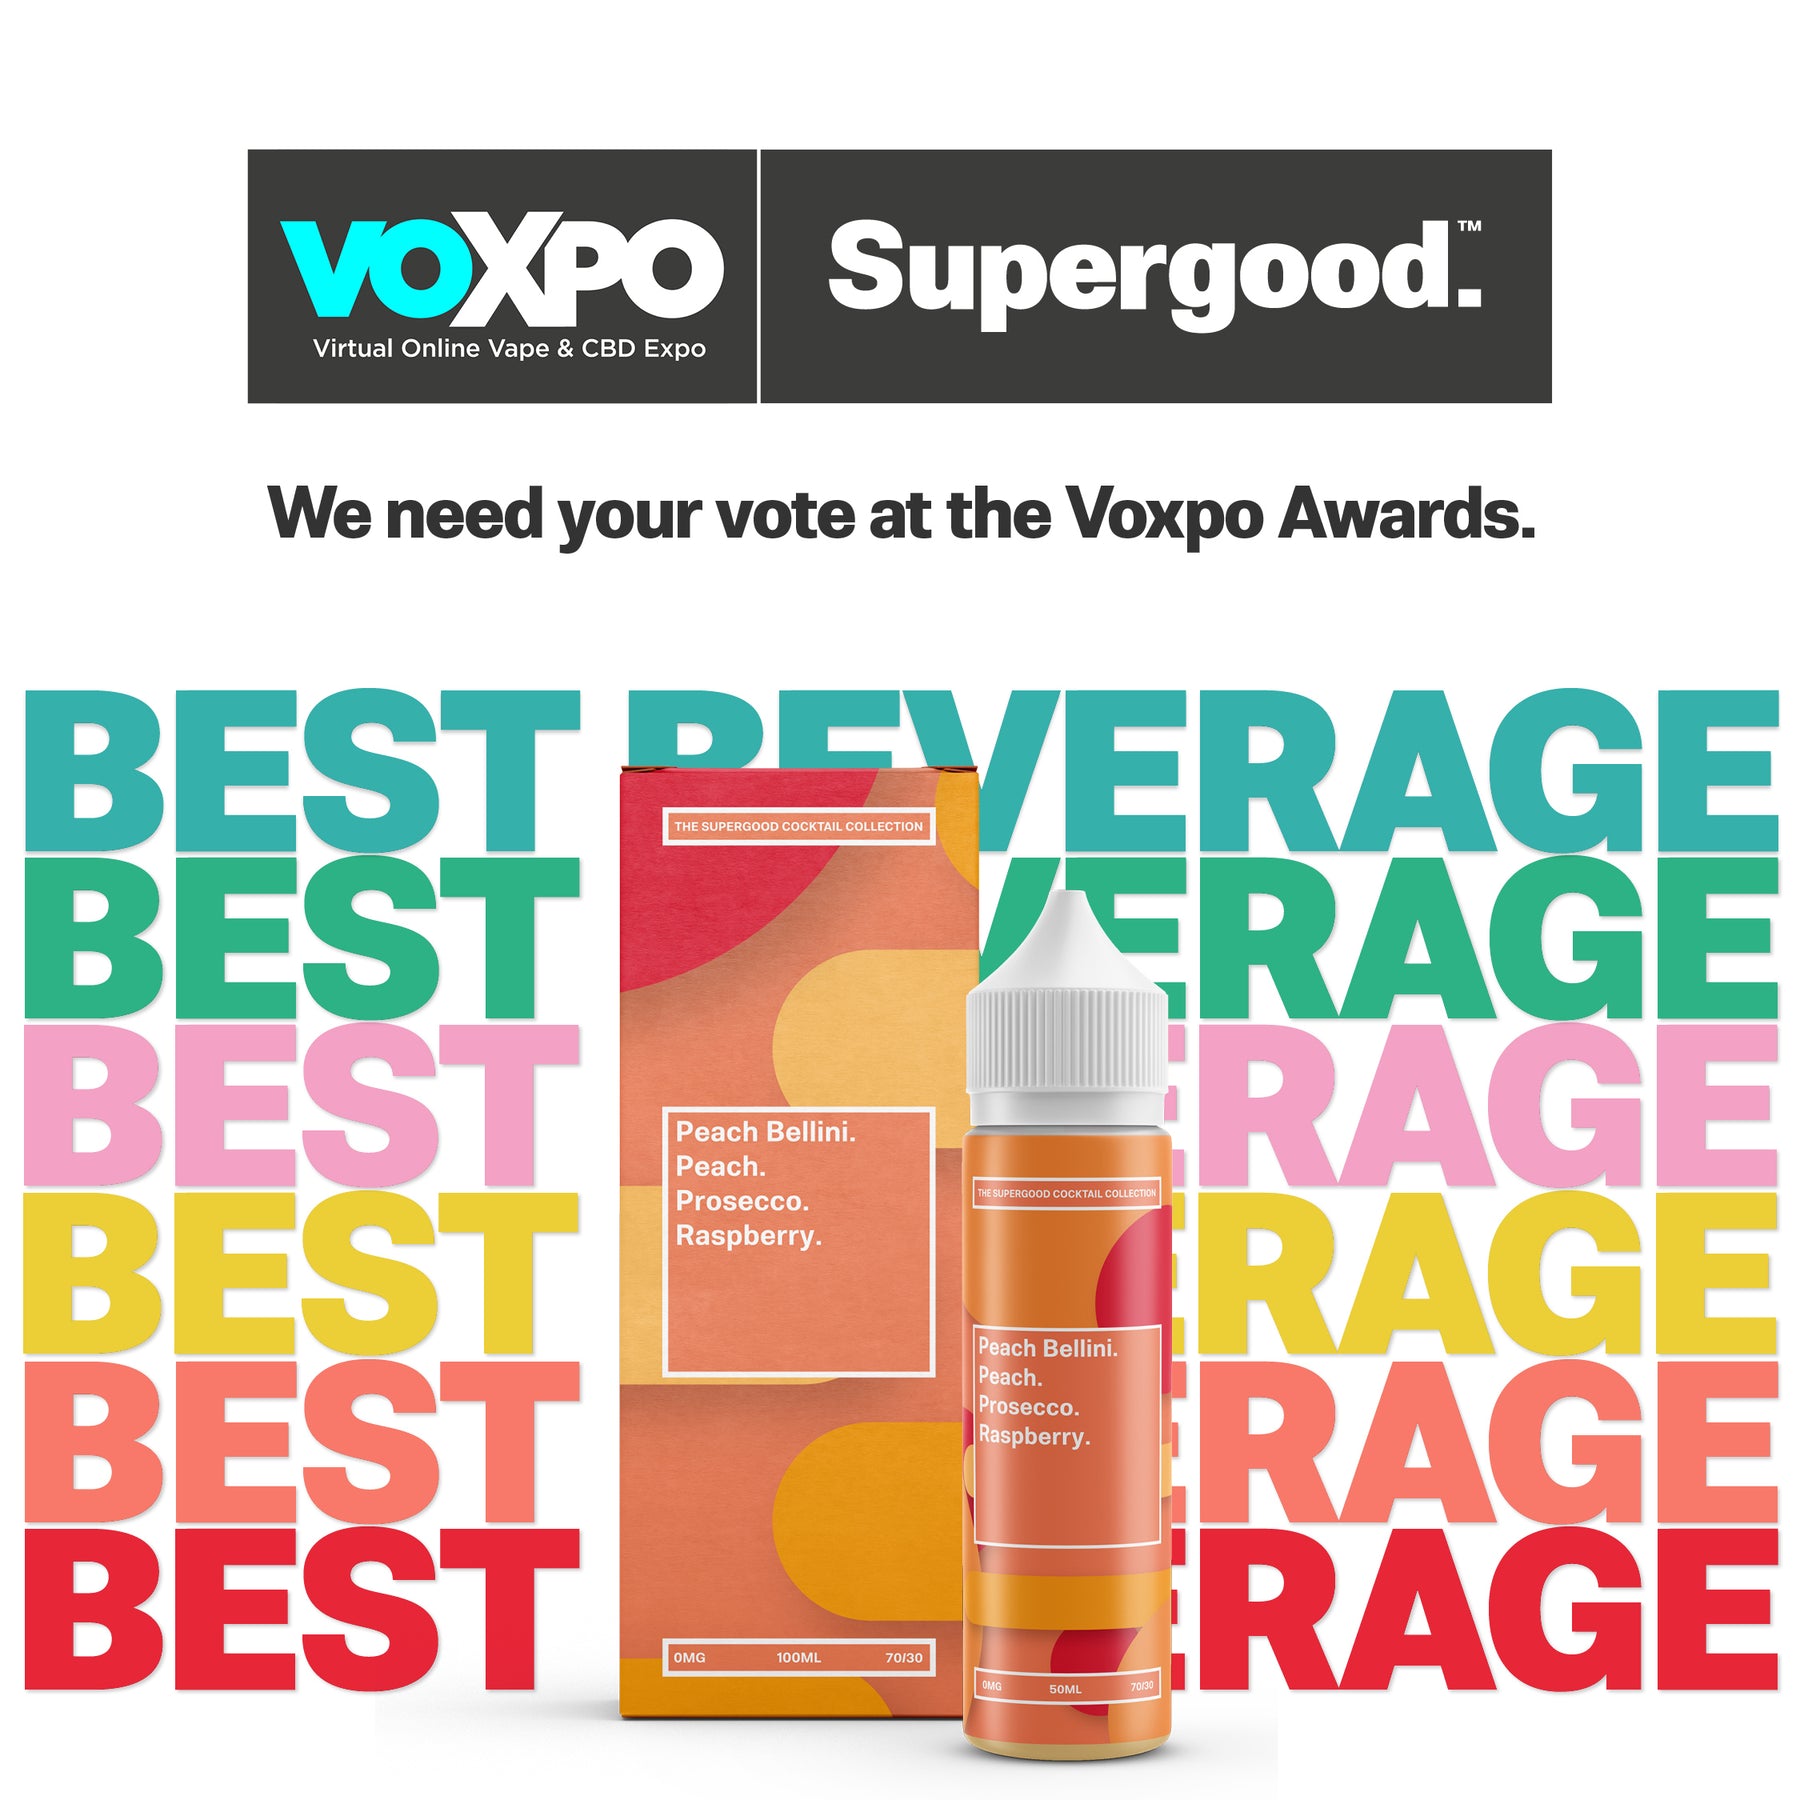 Voxpo Awards, Best Beverage.